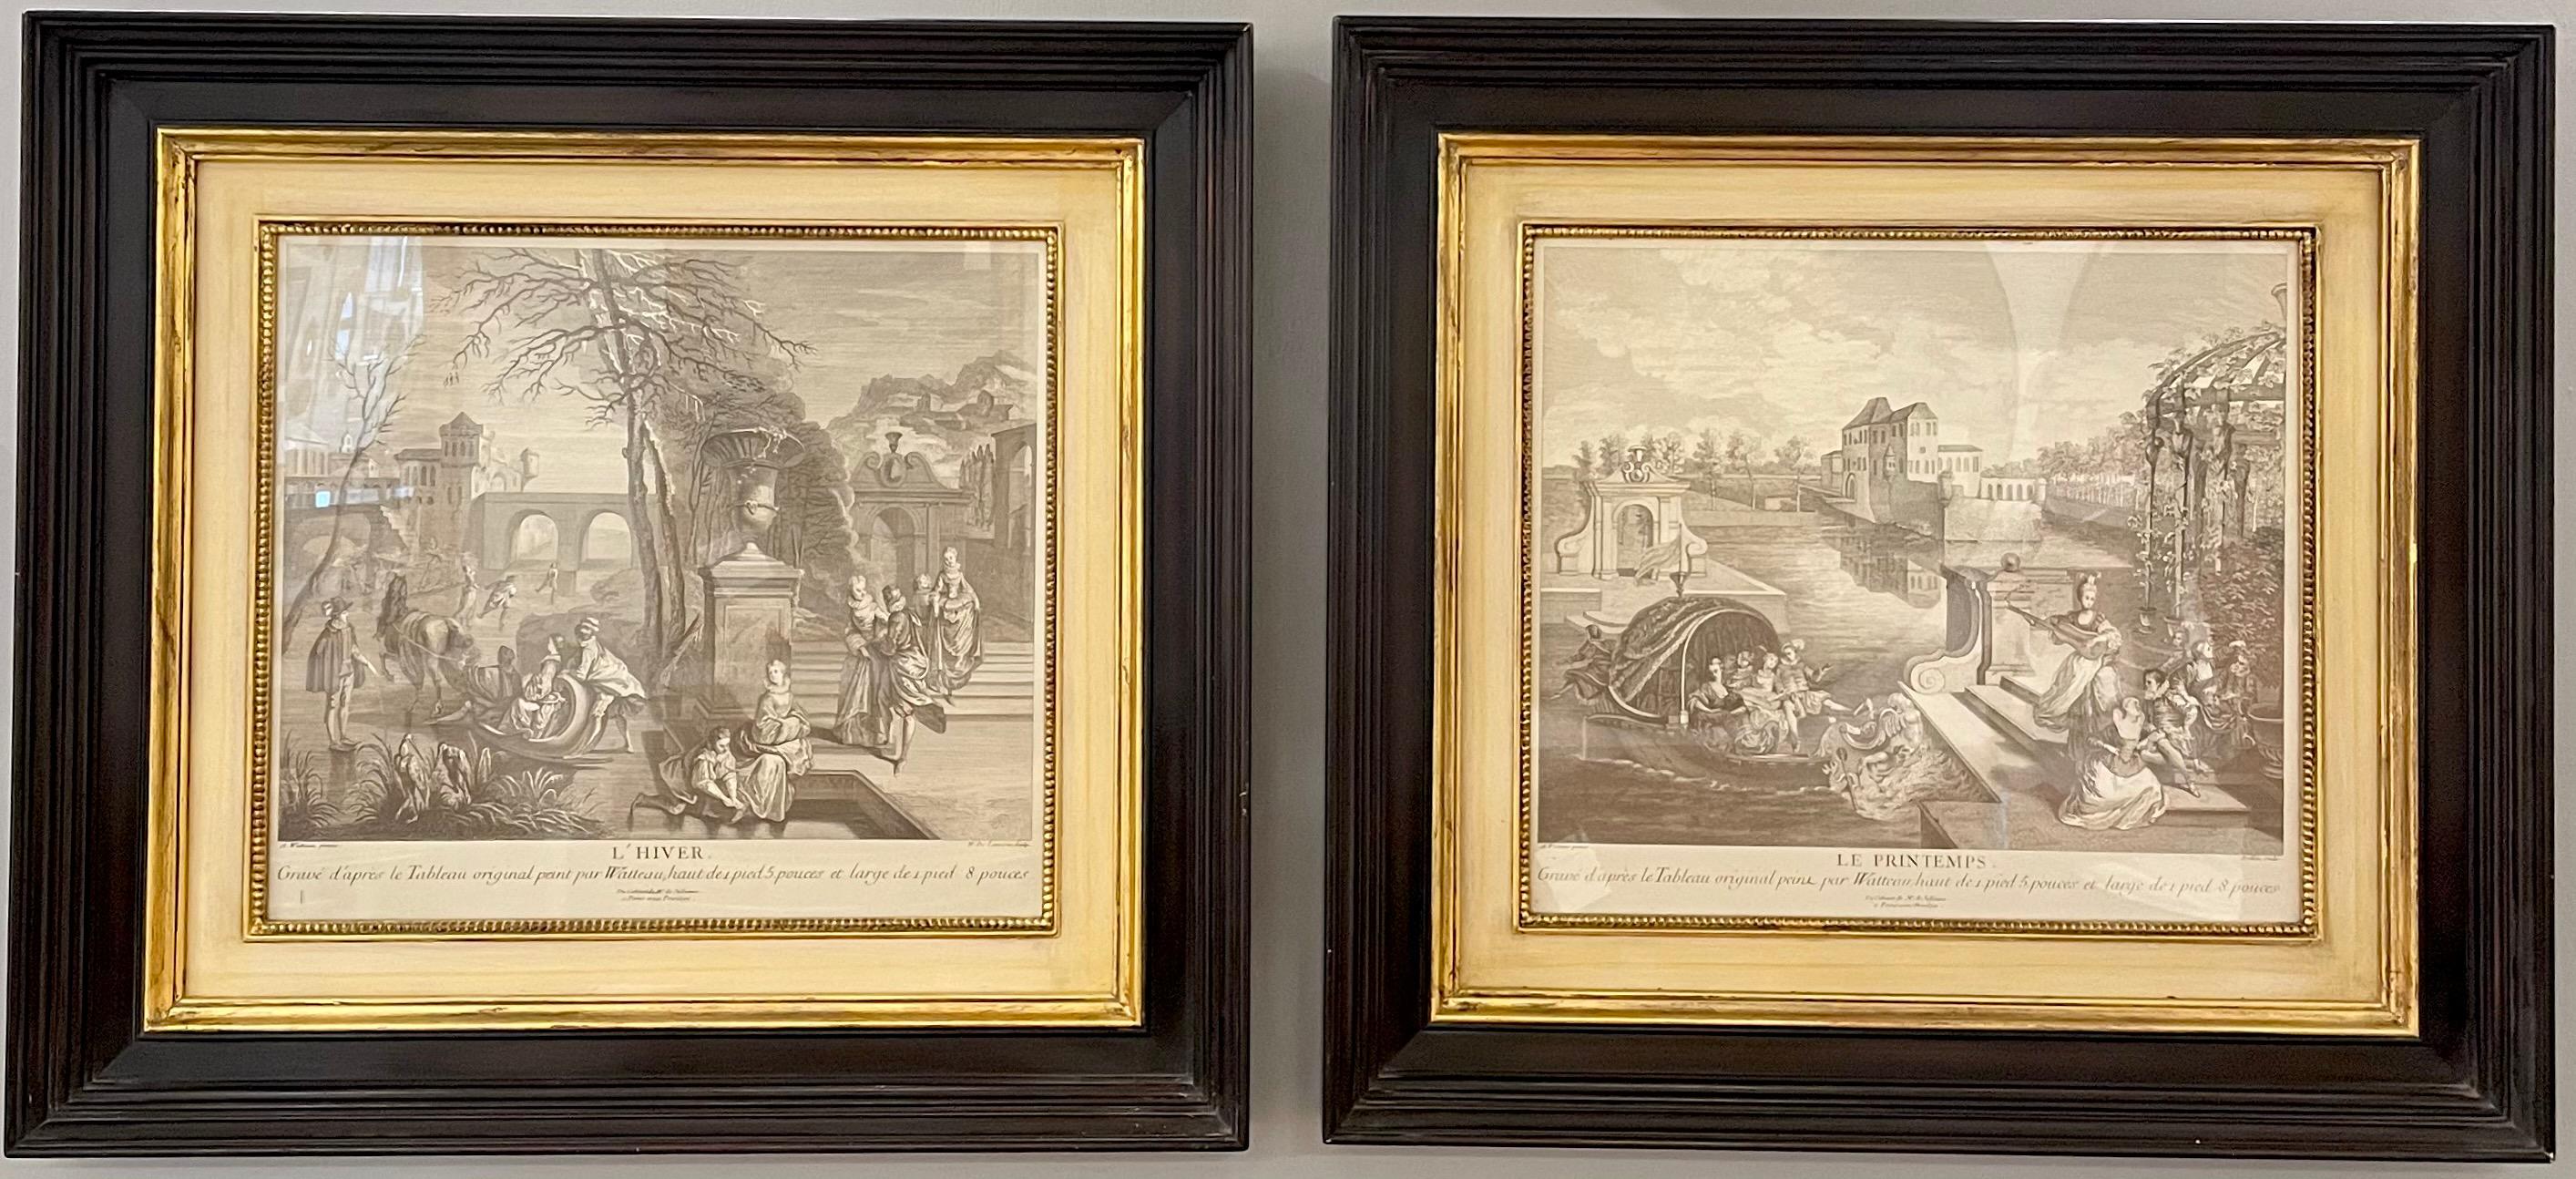 A pair of prints finely framed L'Hiver et Printemps. Each in a fine gilt wood frame set in a ebony larger frame.